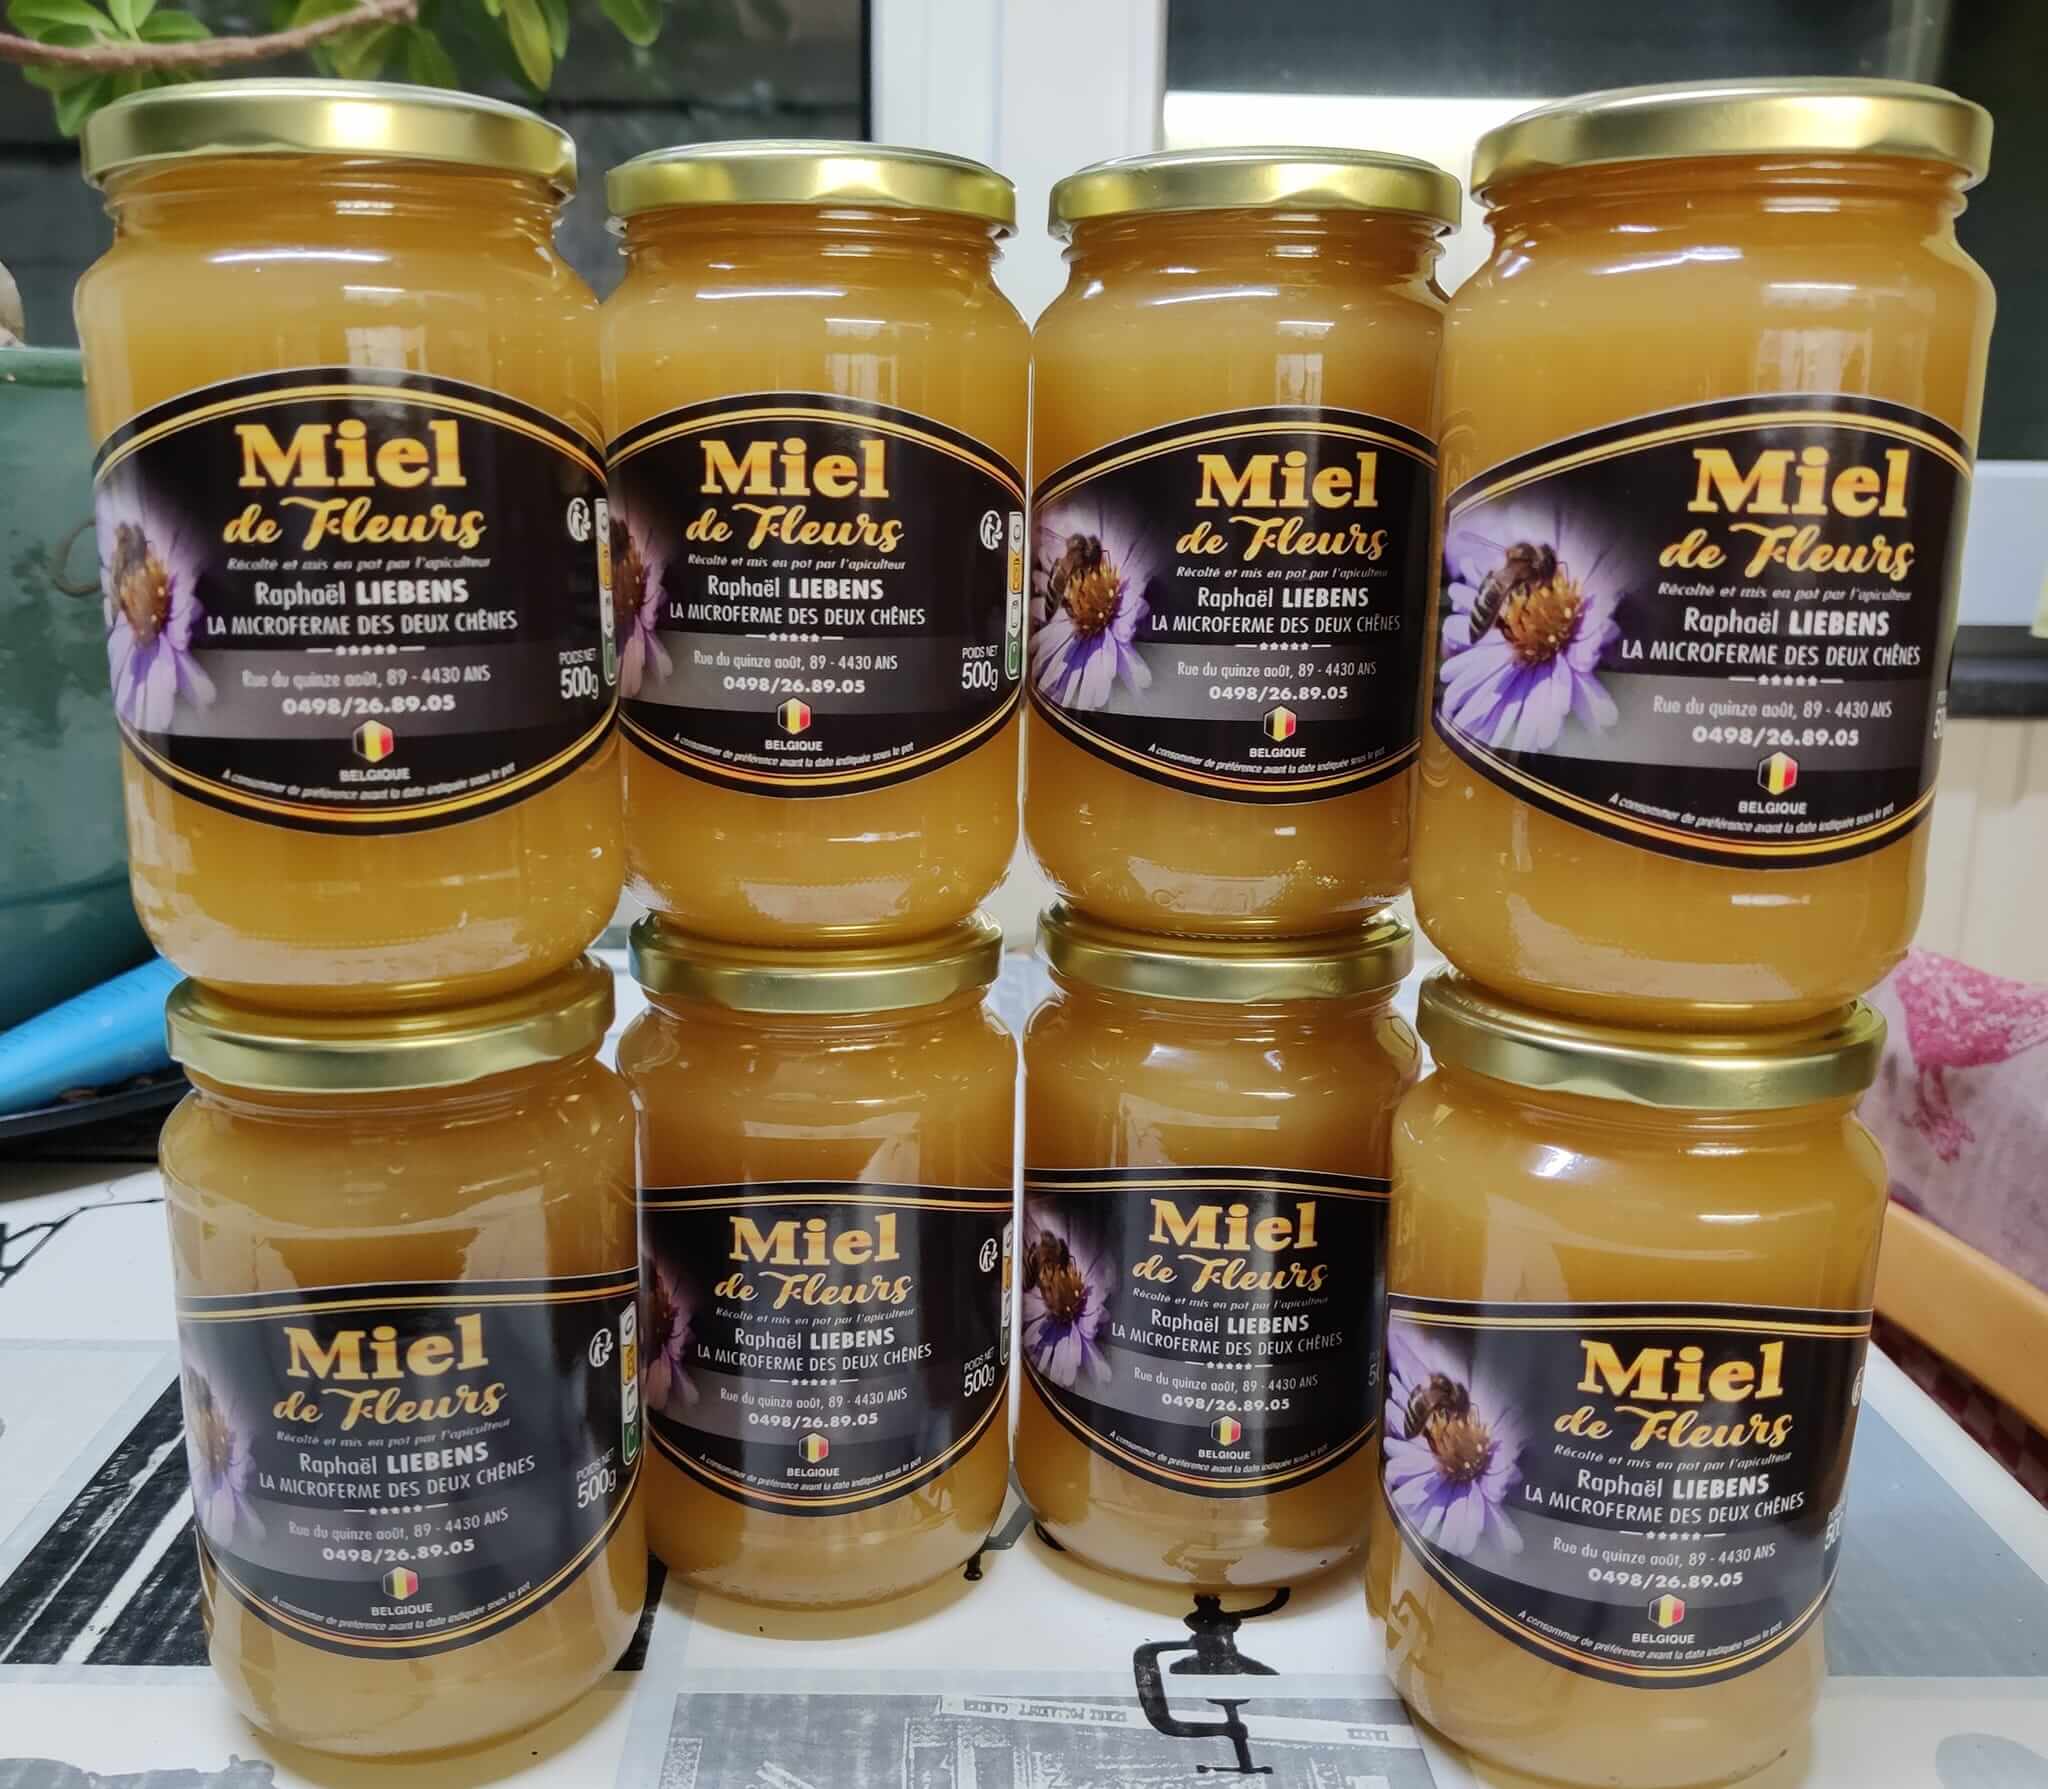 Notre production de miel